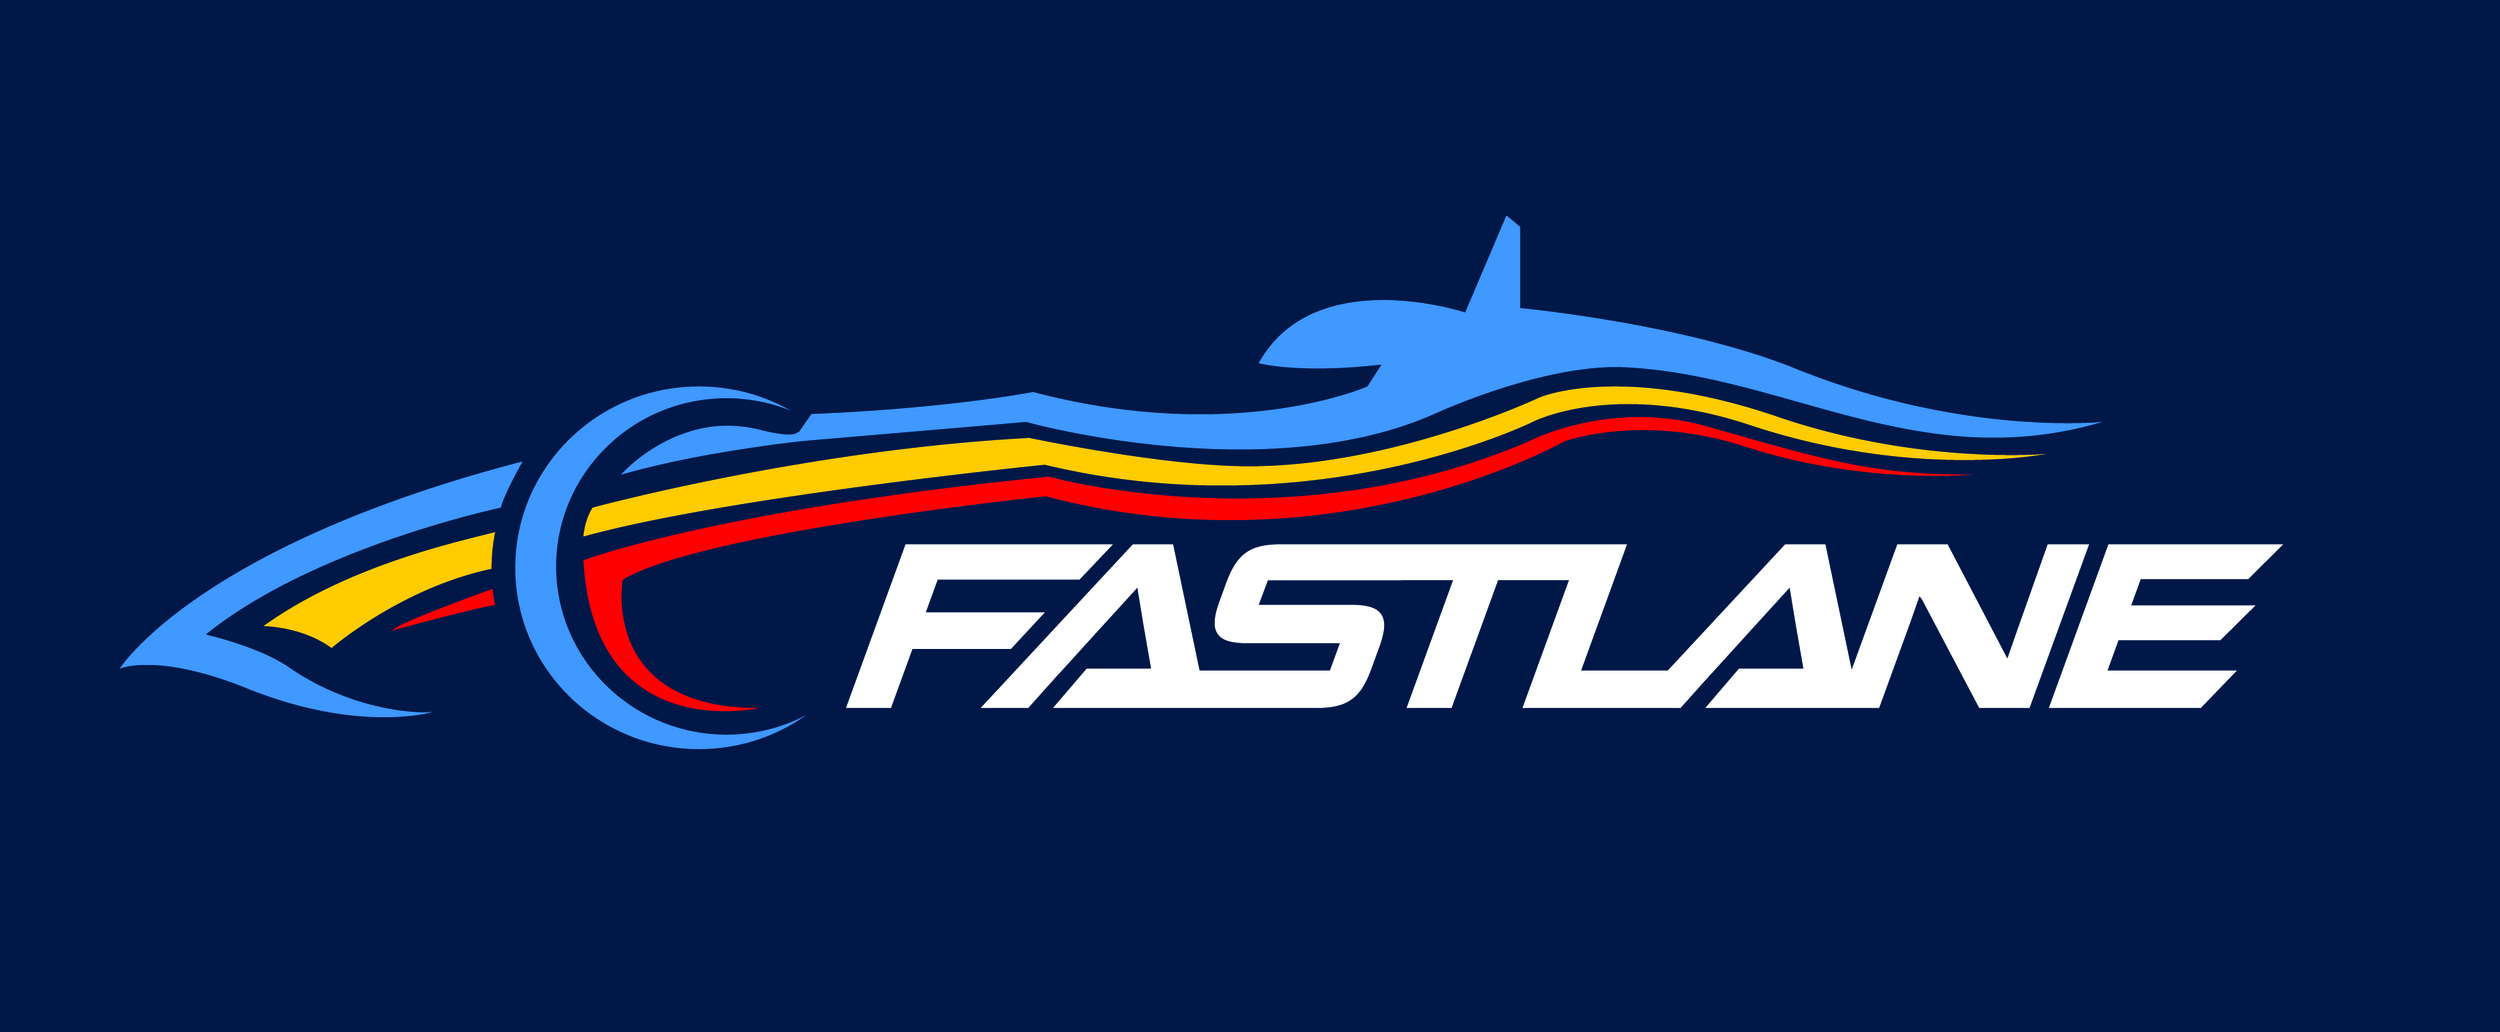 Fastlane_logo.jpg